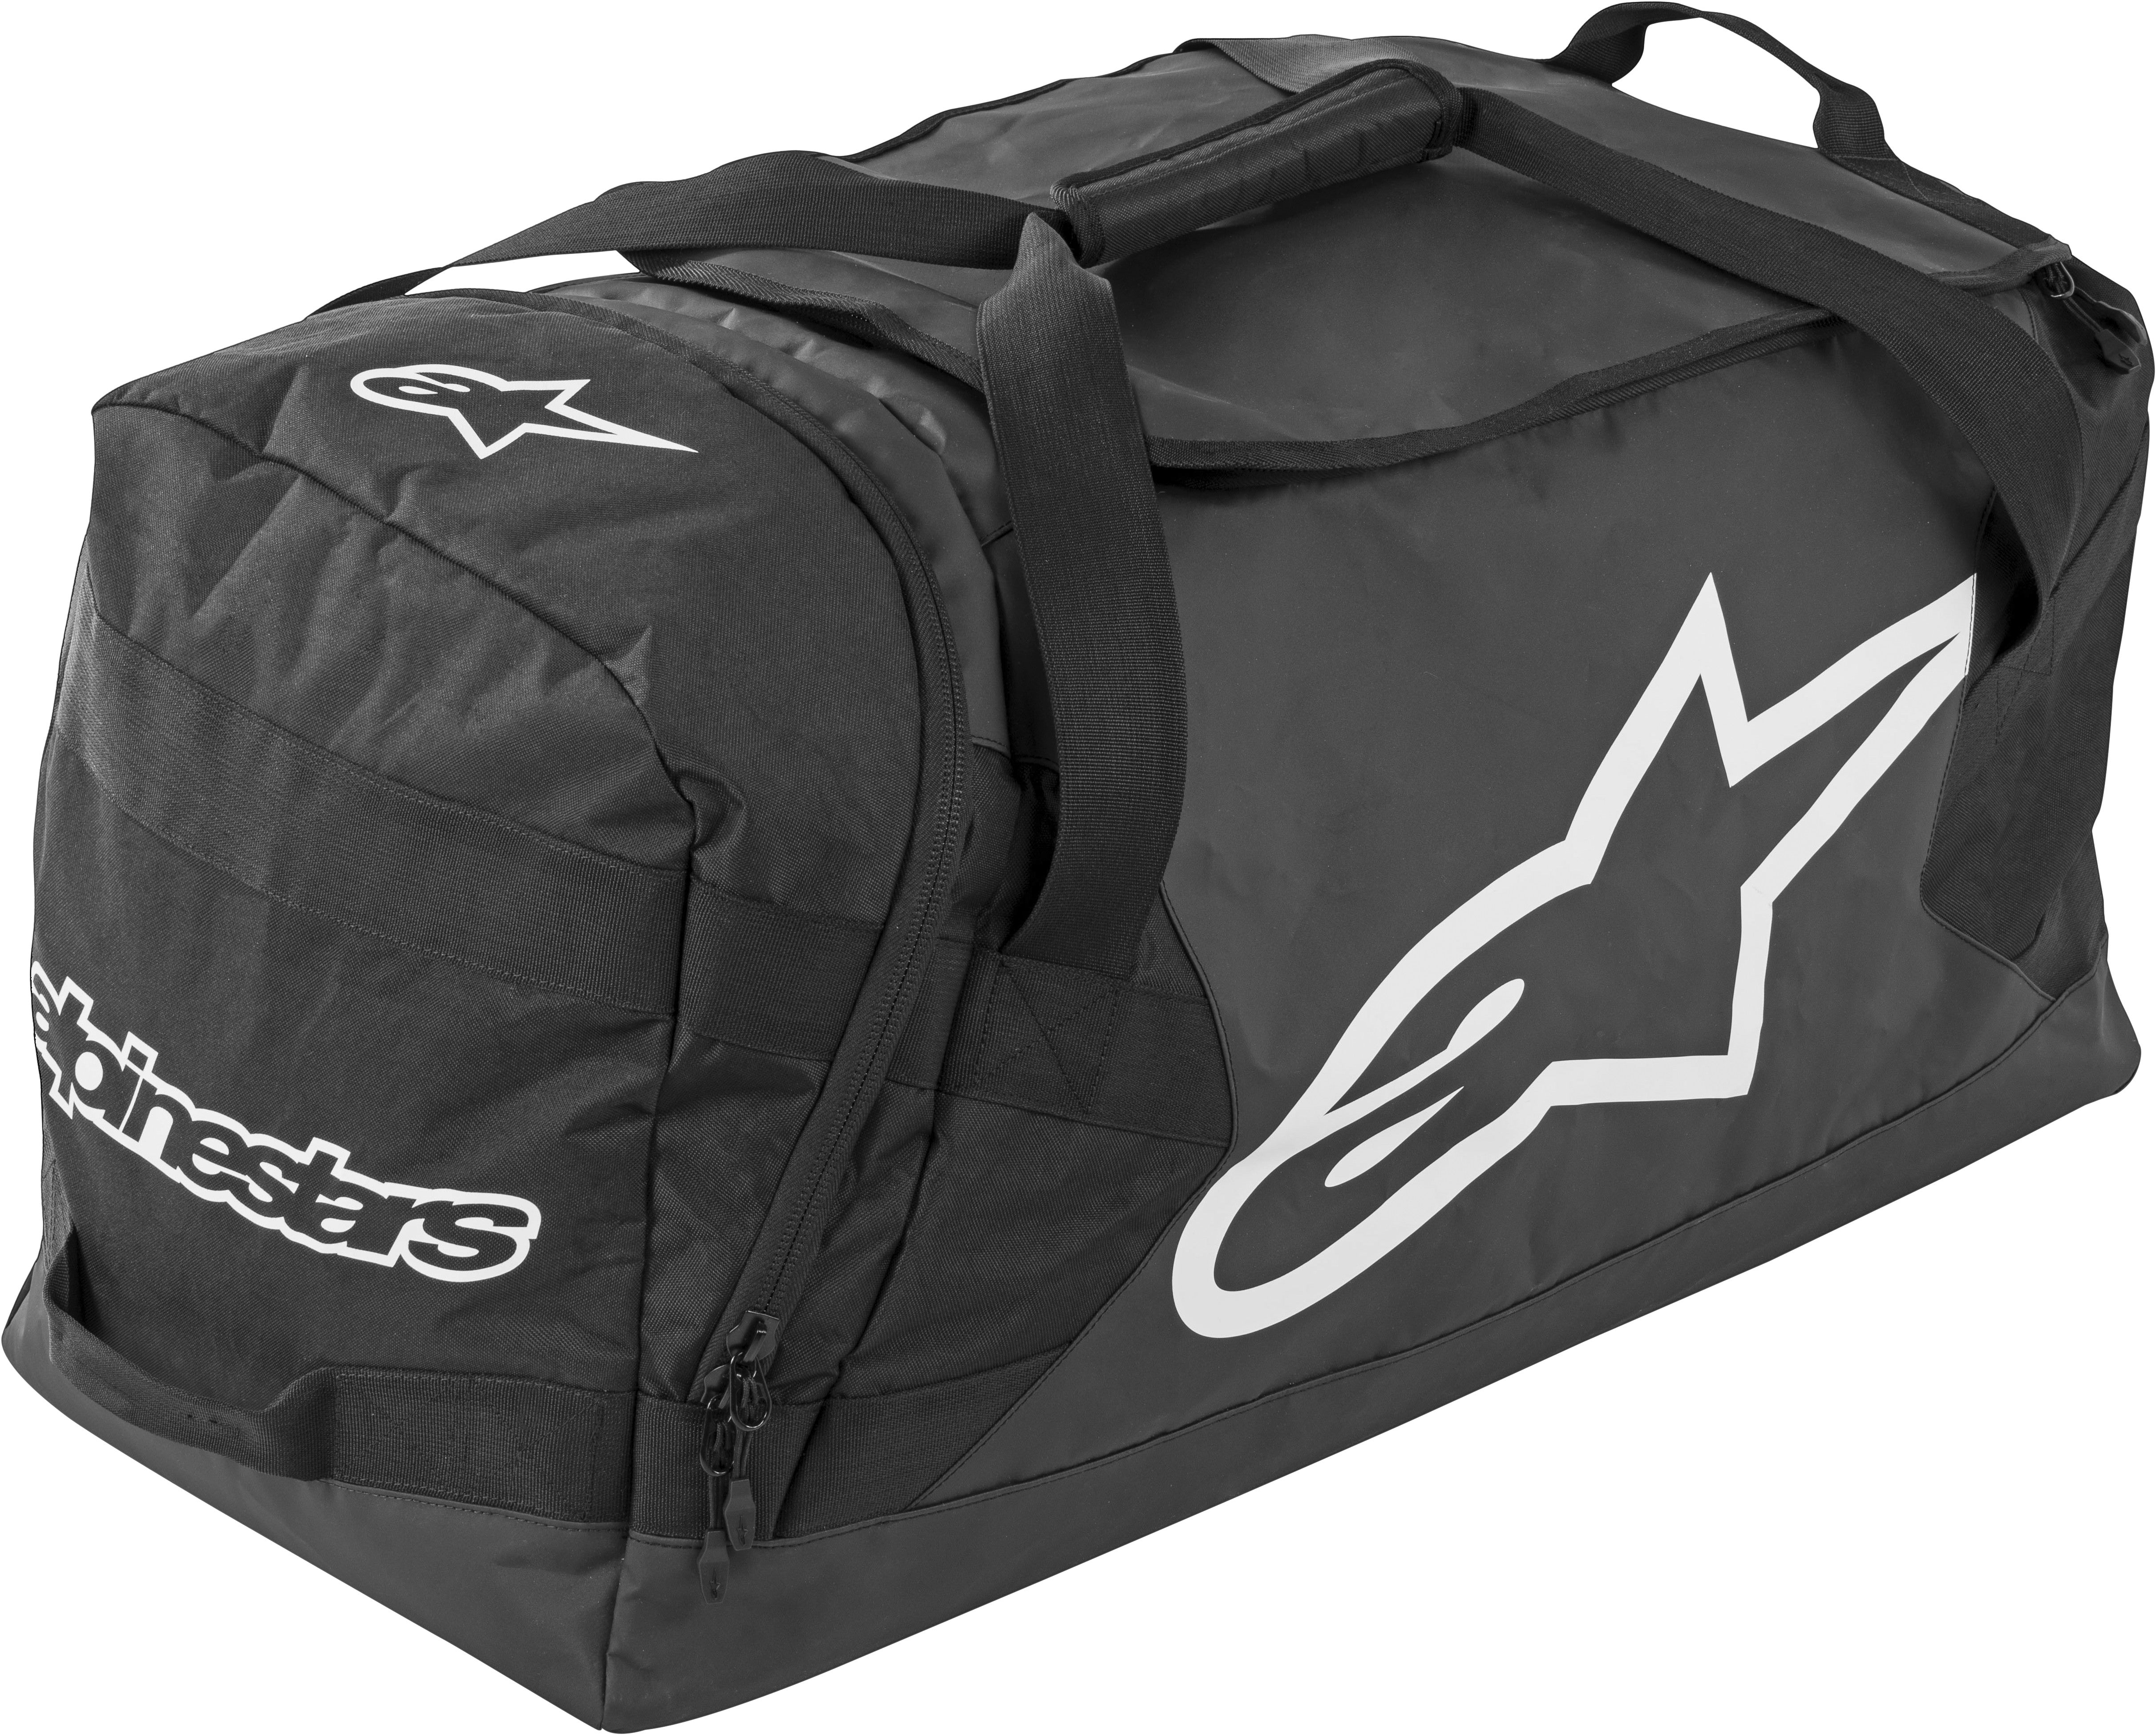 Alpinestars Goanna Duffle Bag Black/White  6106018-140-Os